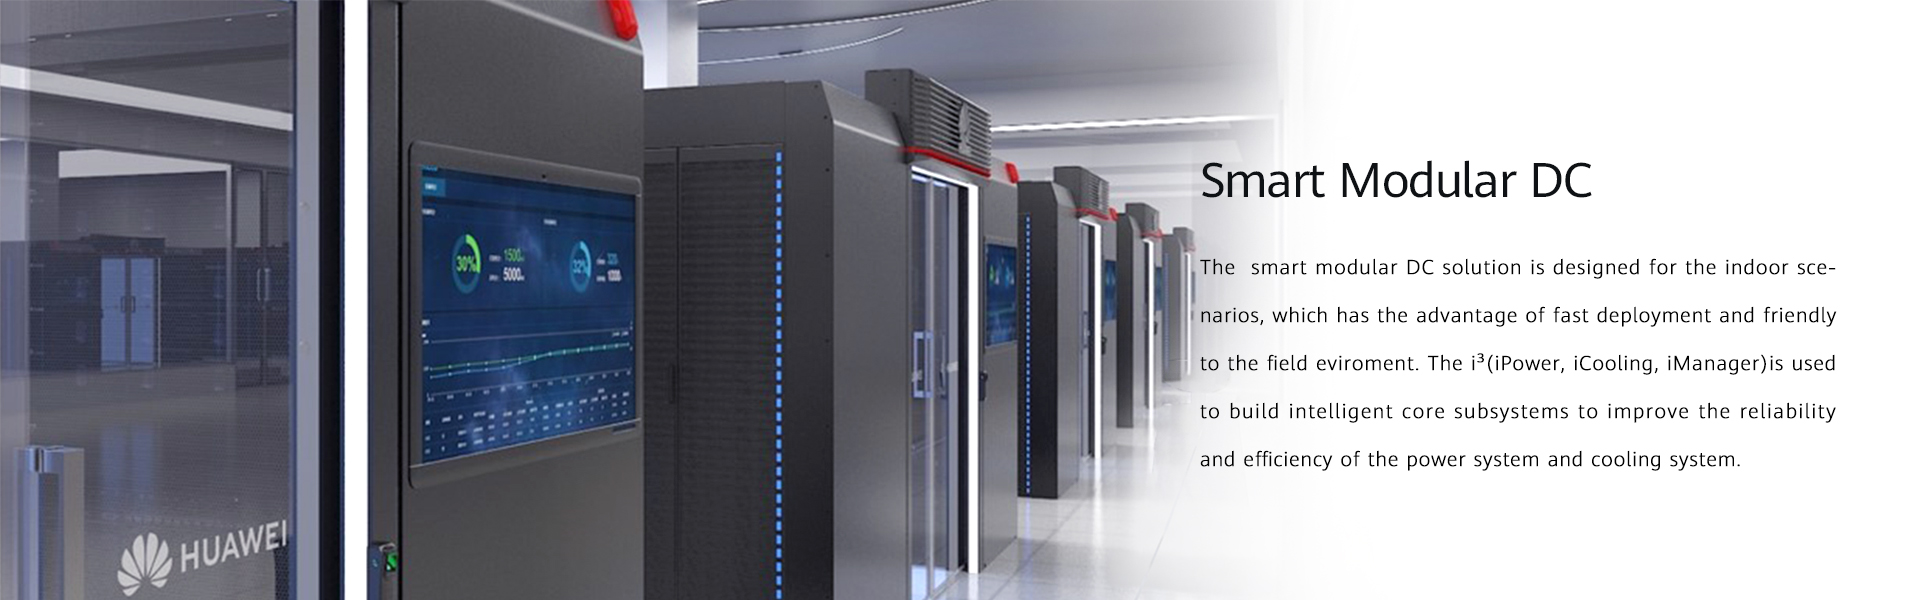 Huawei Smart Modular Data Center